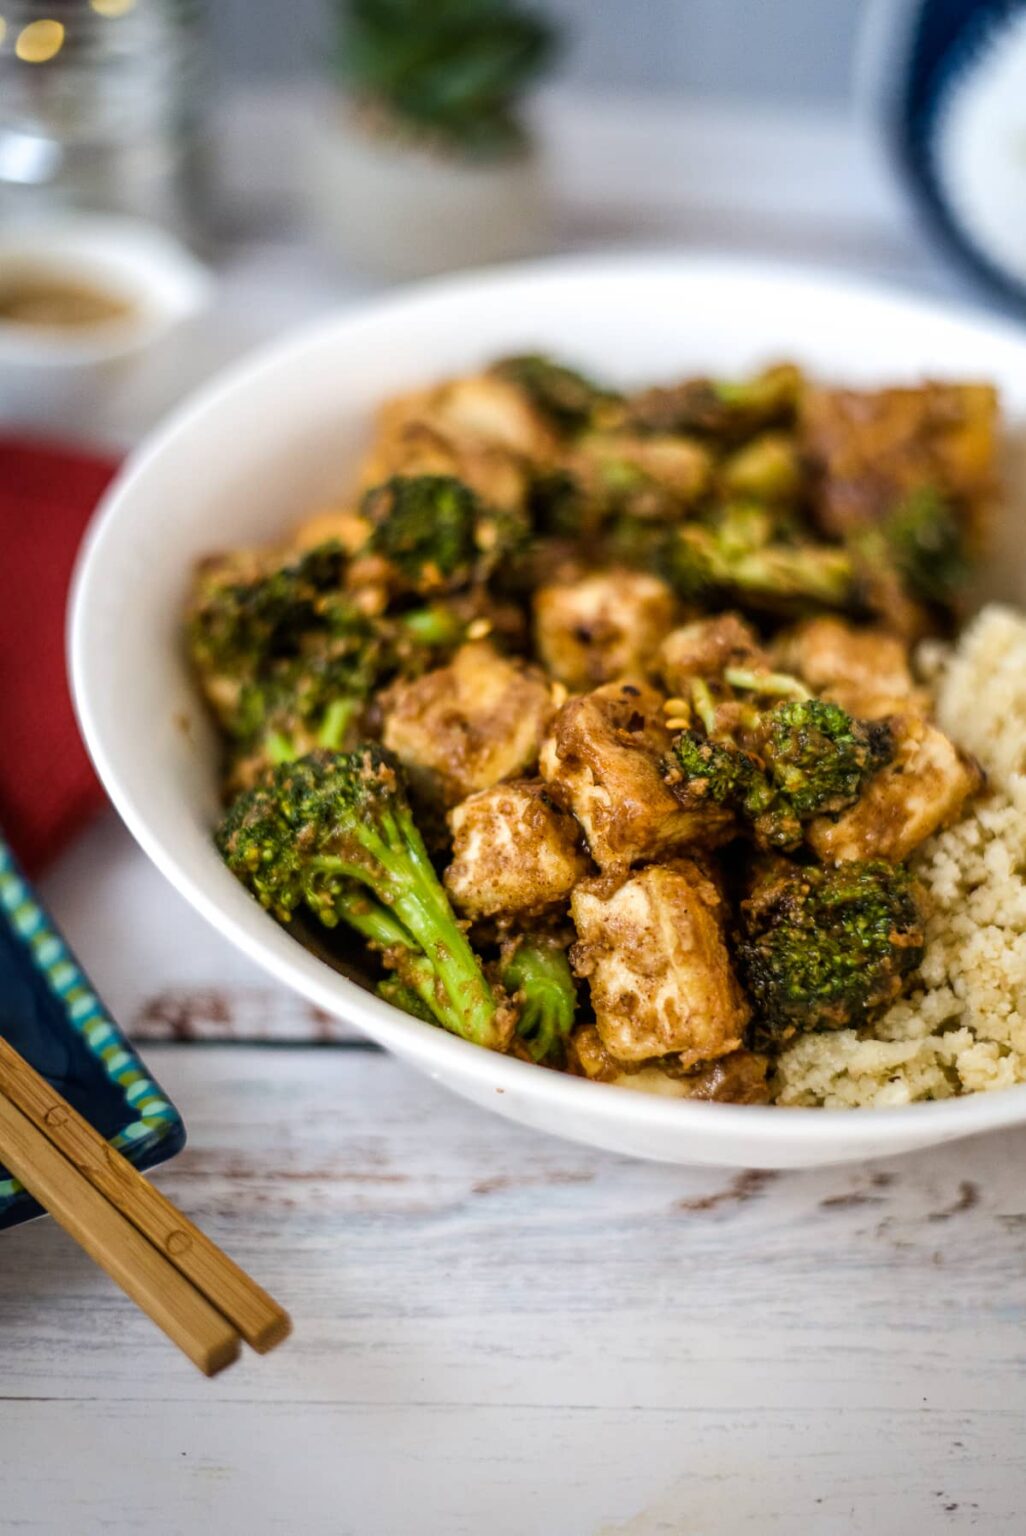 Keto Tofu Stir Fry with Broccoli - Keto Low Carb Vegetarian Recipes